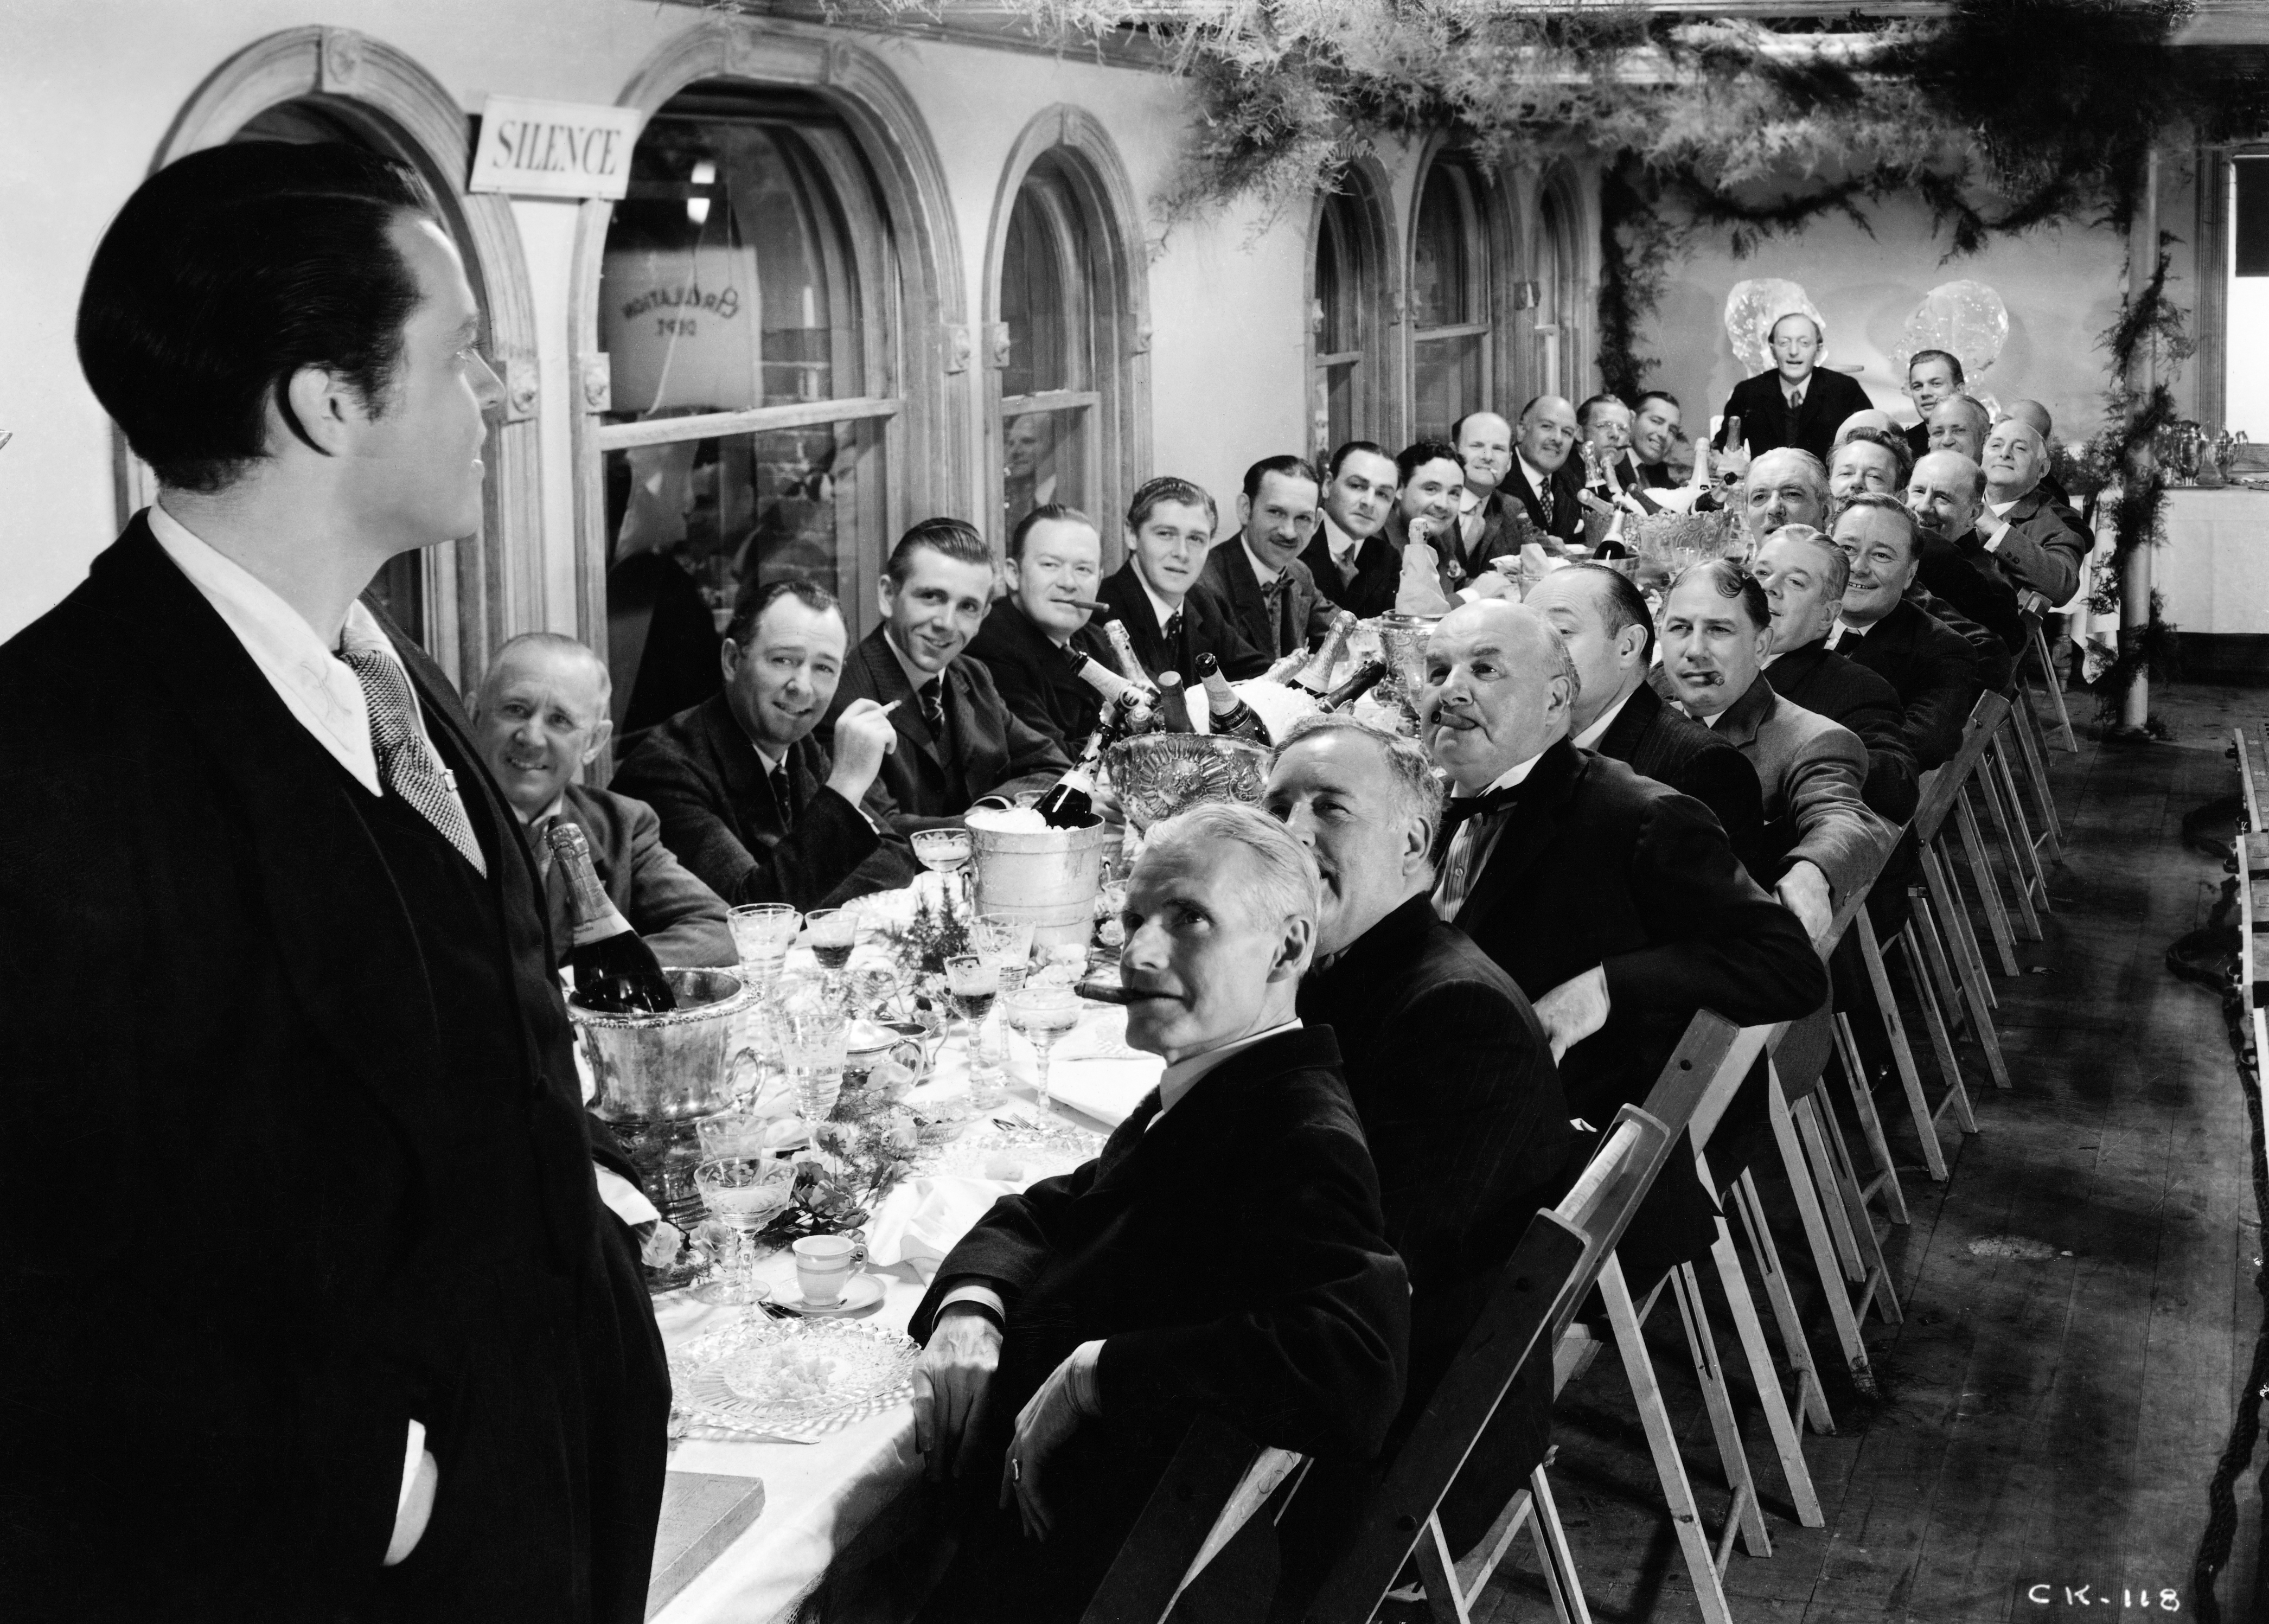 Orson Welles in Citizen Kane (1941)